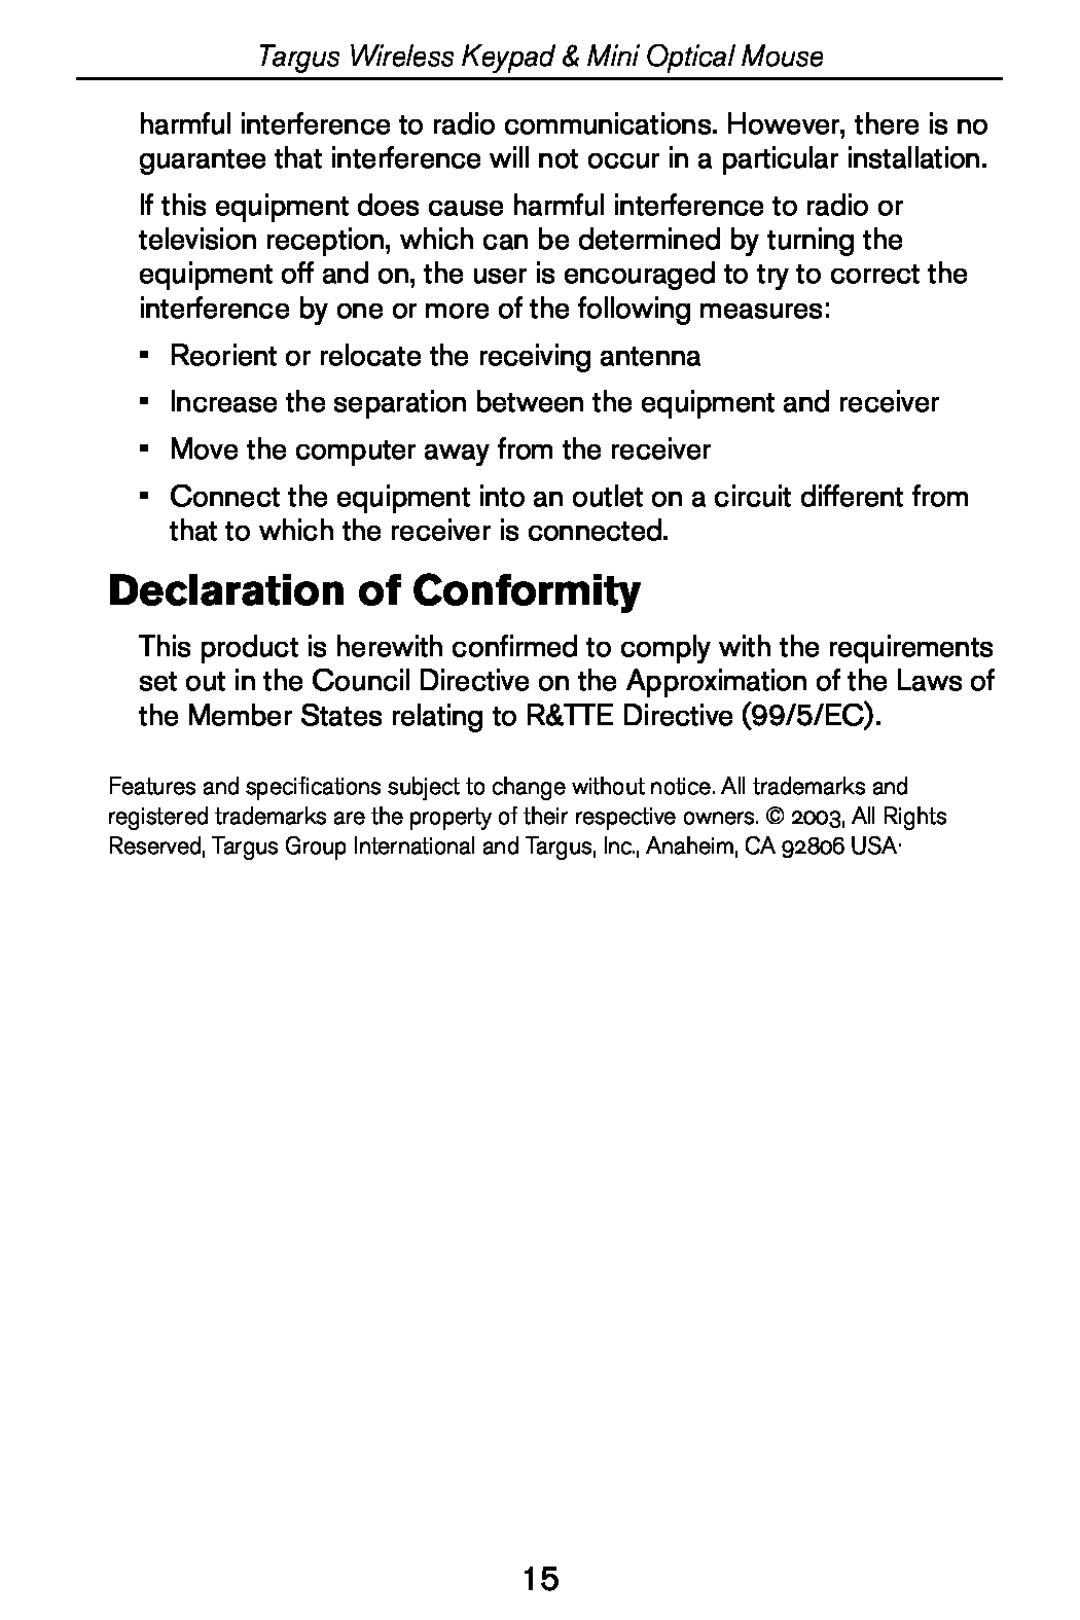 Targus specifications Declaration of Conformity, Targus Wireless Keypad & Mini Optical Mouse 